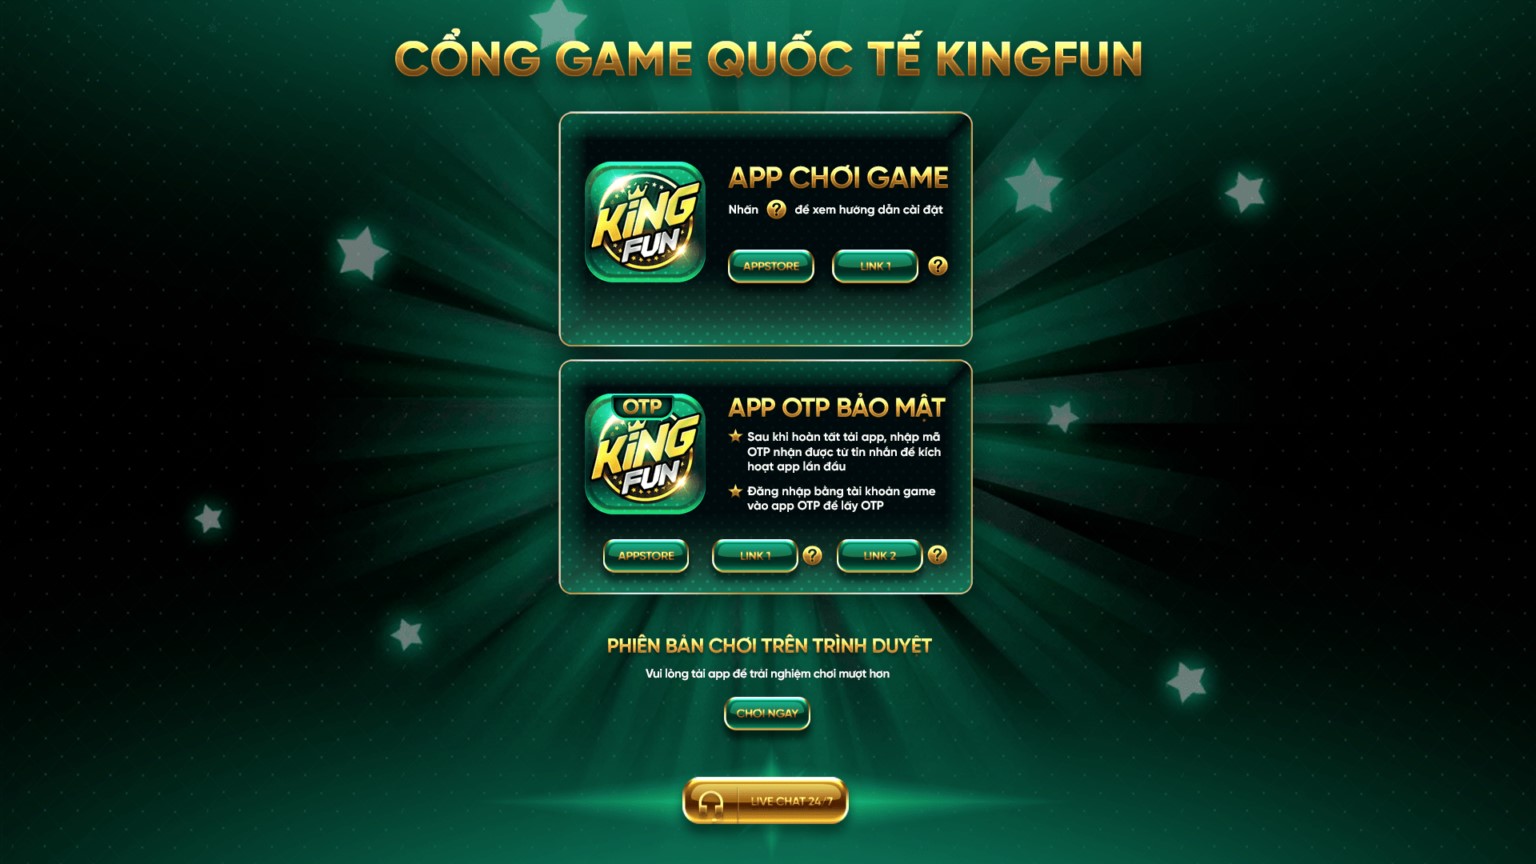 King Fun - Link tải Game Bài King Fun iOS, APK, OTP, PC 2021 - Ảnh 3